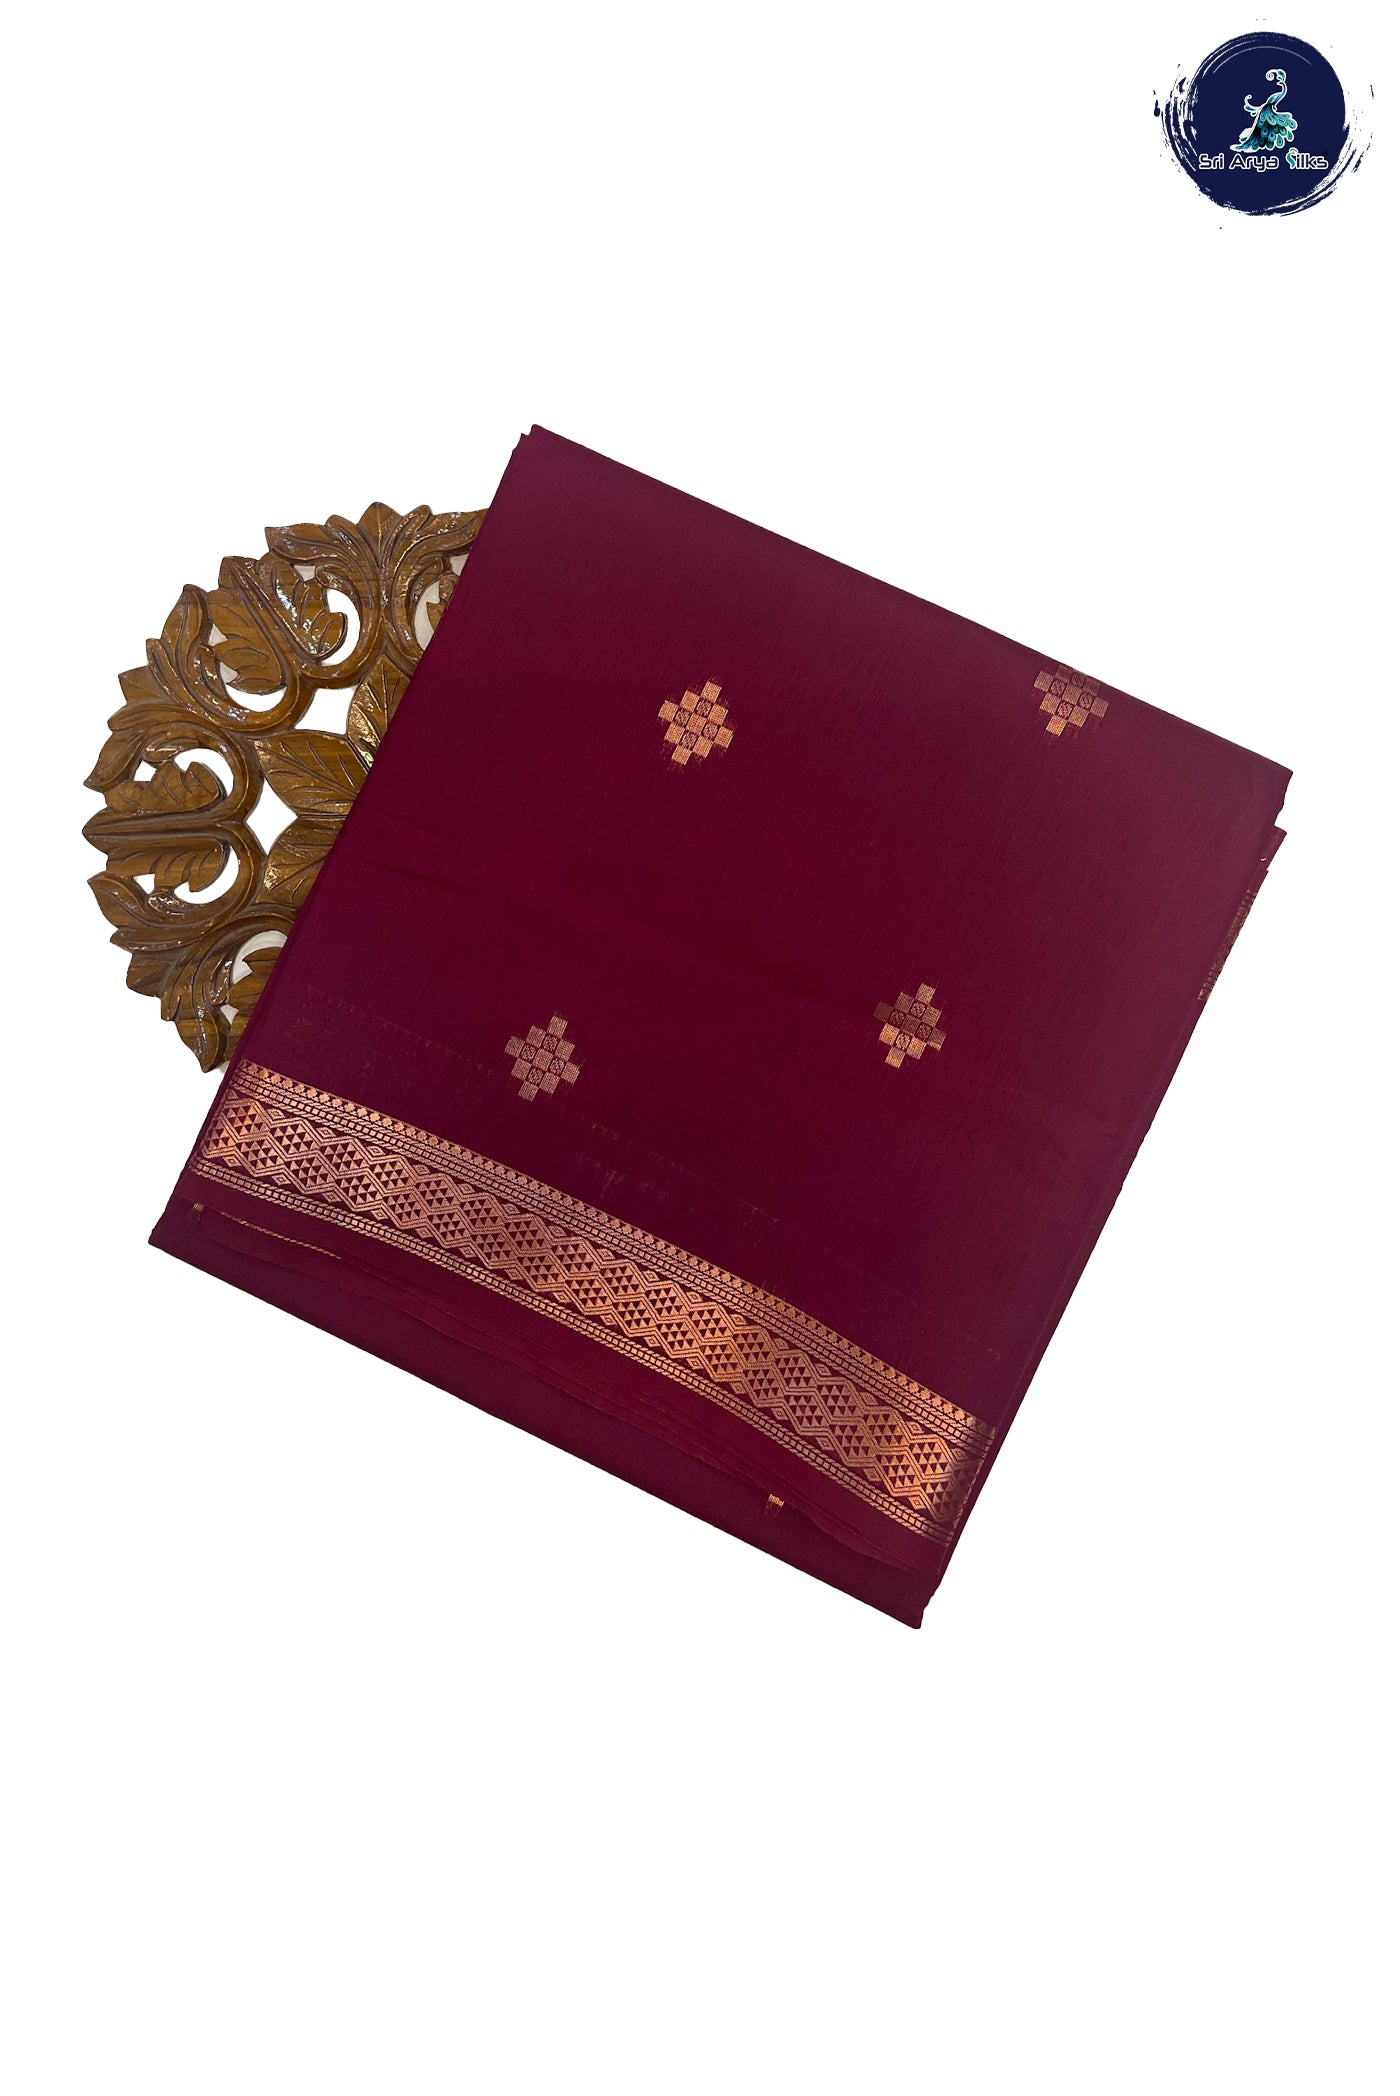 Dual Tone Maroon Madisar Semi Silk Cotton Saree With Copper Zari Buttas Pattern